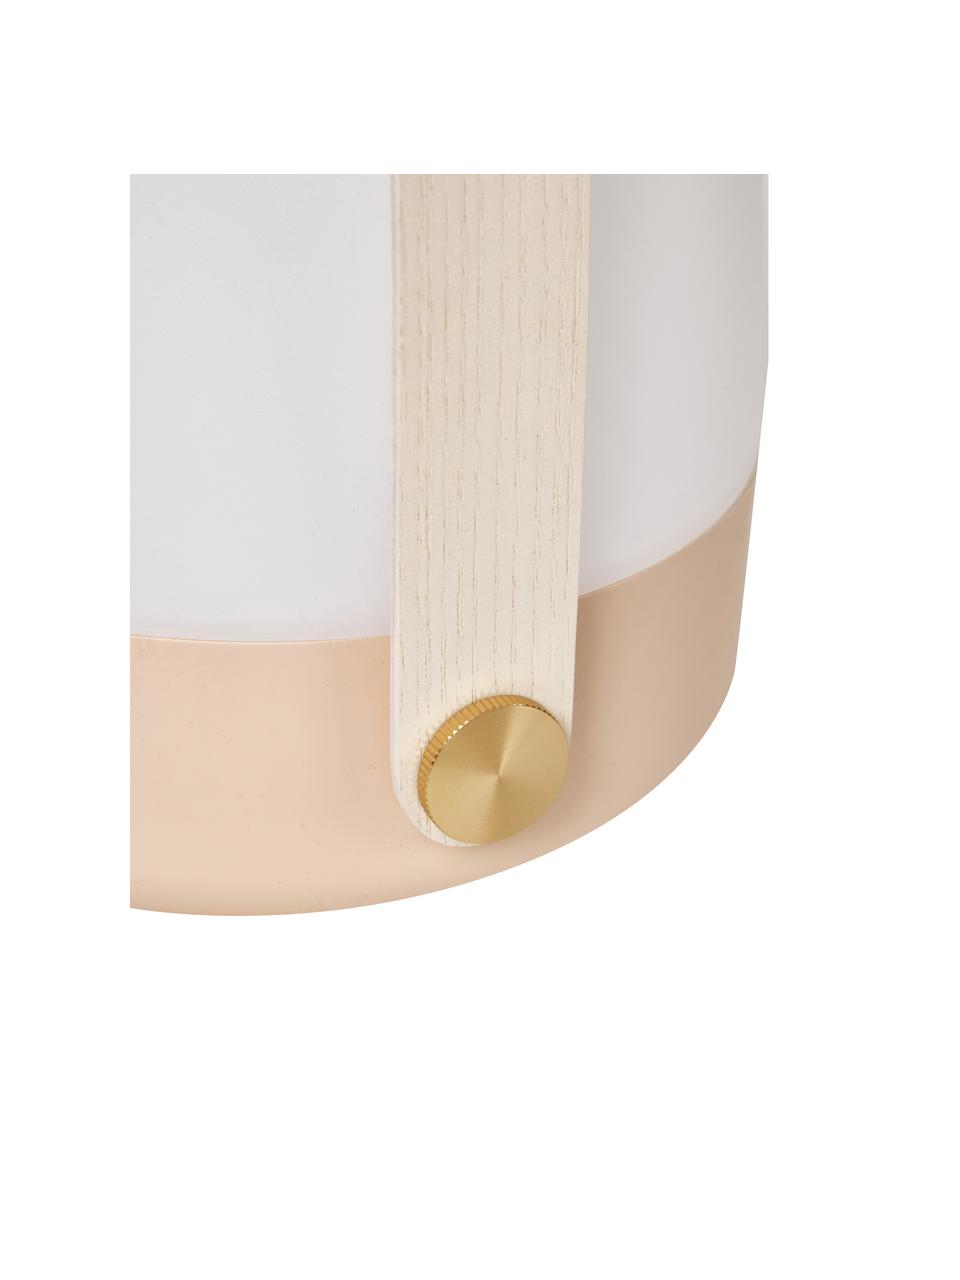 Mobile Dimmbare Außentischlampe Lite-up in Rosa, Lampenschirm: Kunststoff, Griff: Holz, Rosa, Weiß, Helles Holz, Ø 20 x H 26 cm